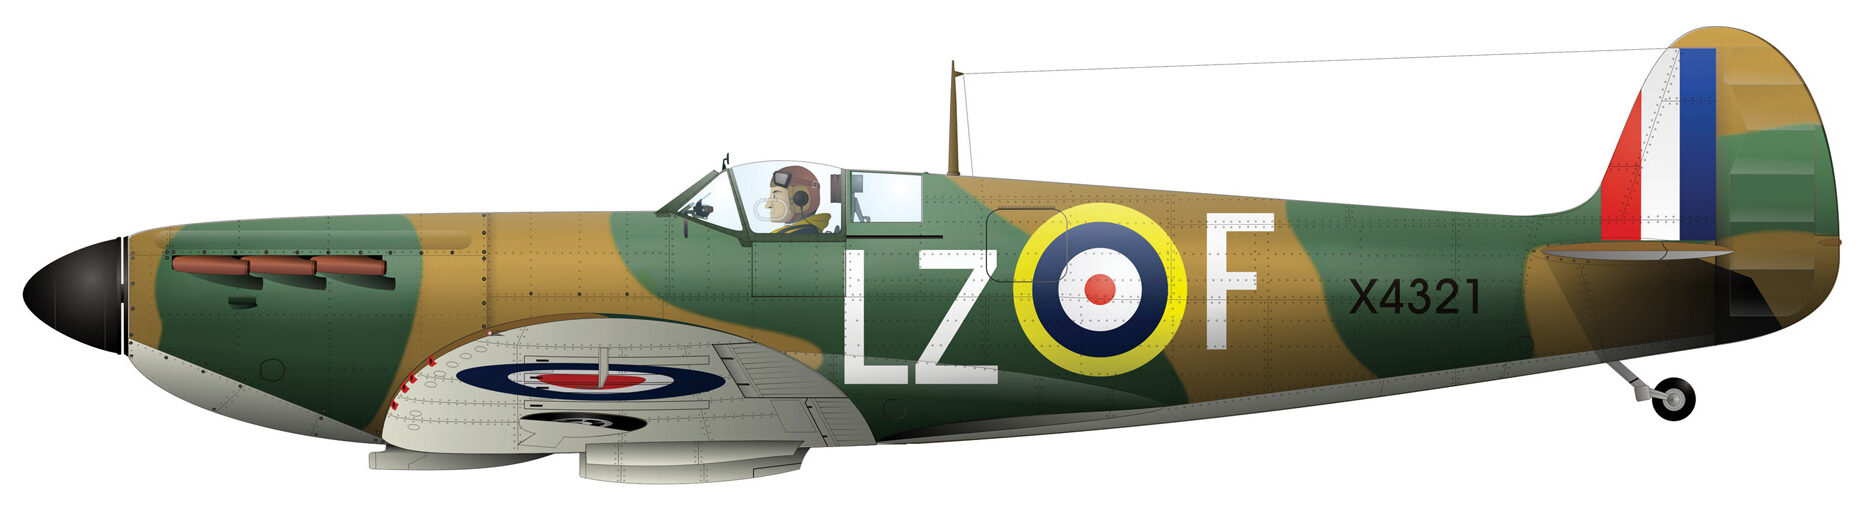 Spitfire Mk I, No. 66 Squadron, Royal Air Force.